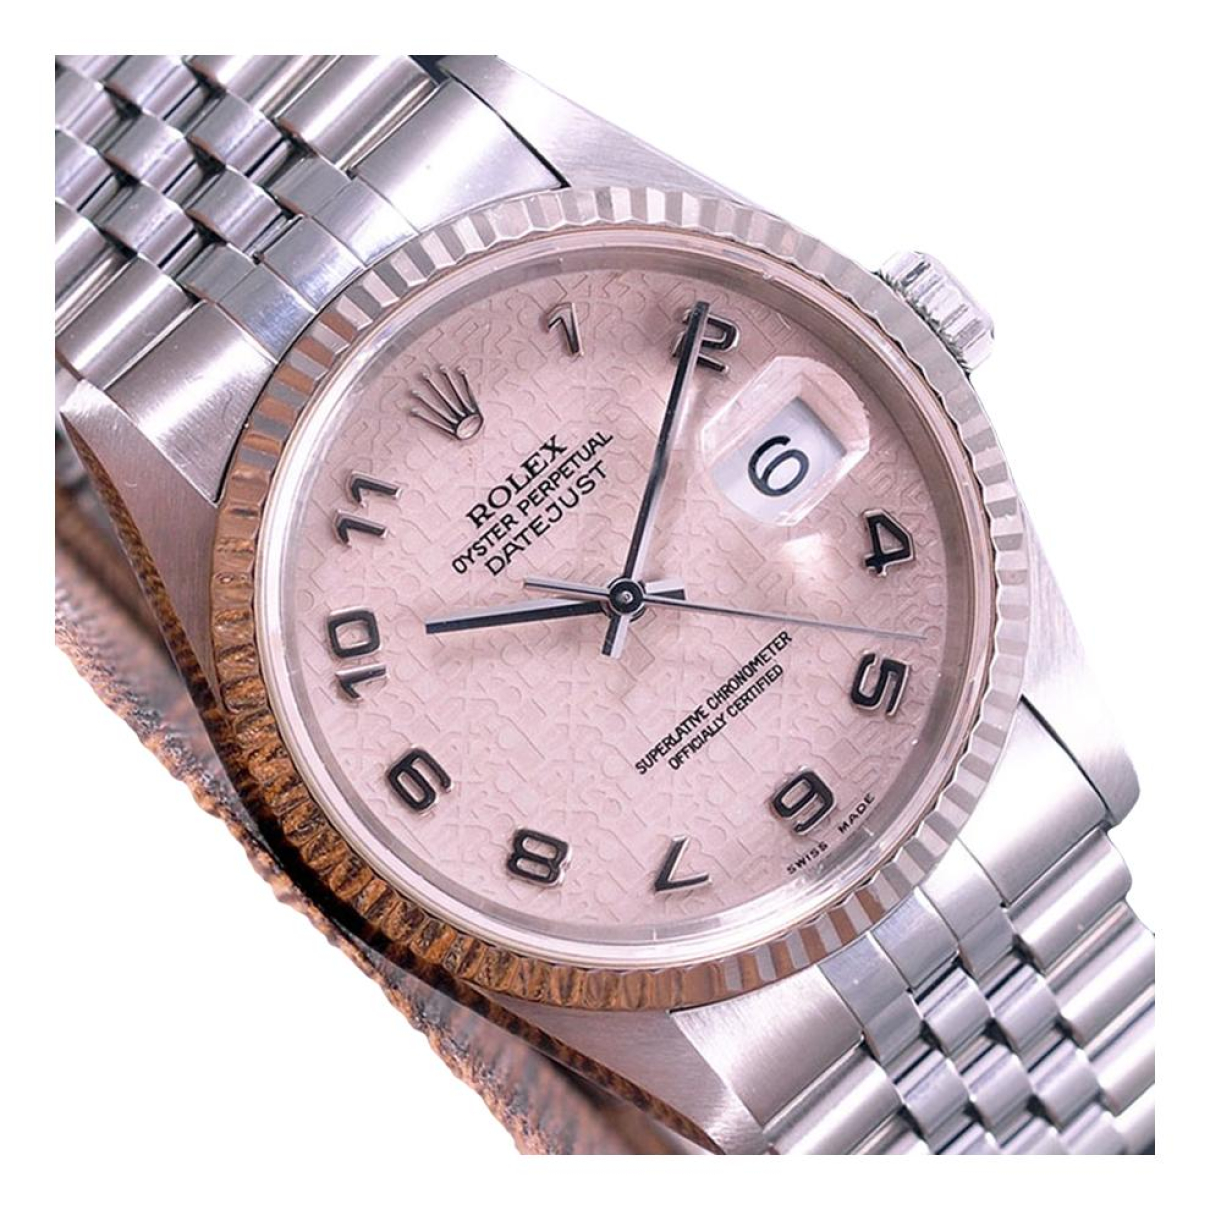 image of Rolex Datejust 36mm watch